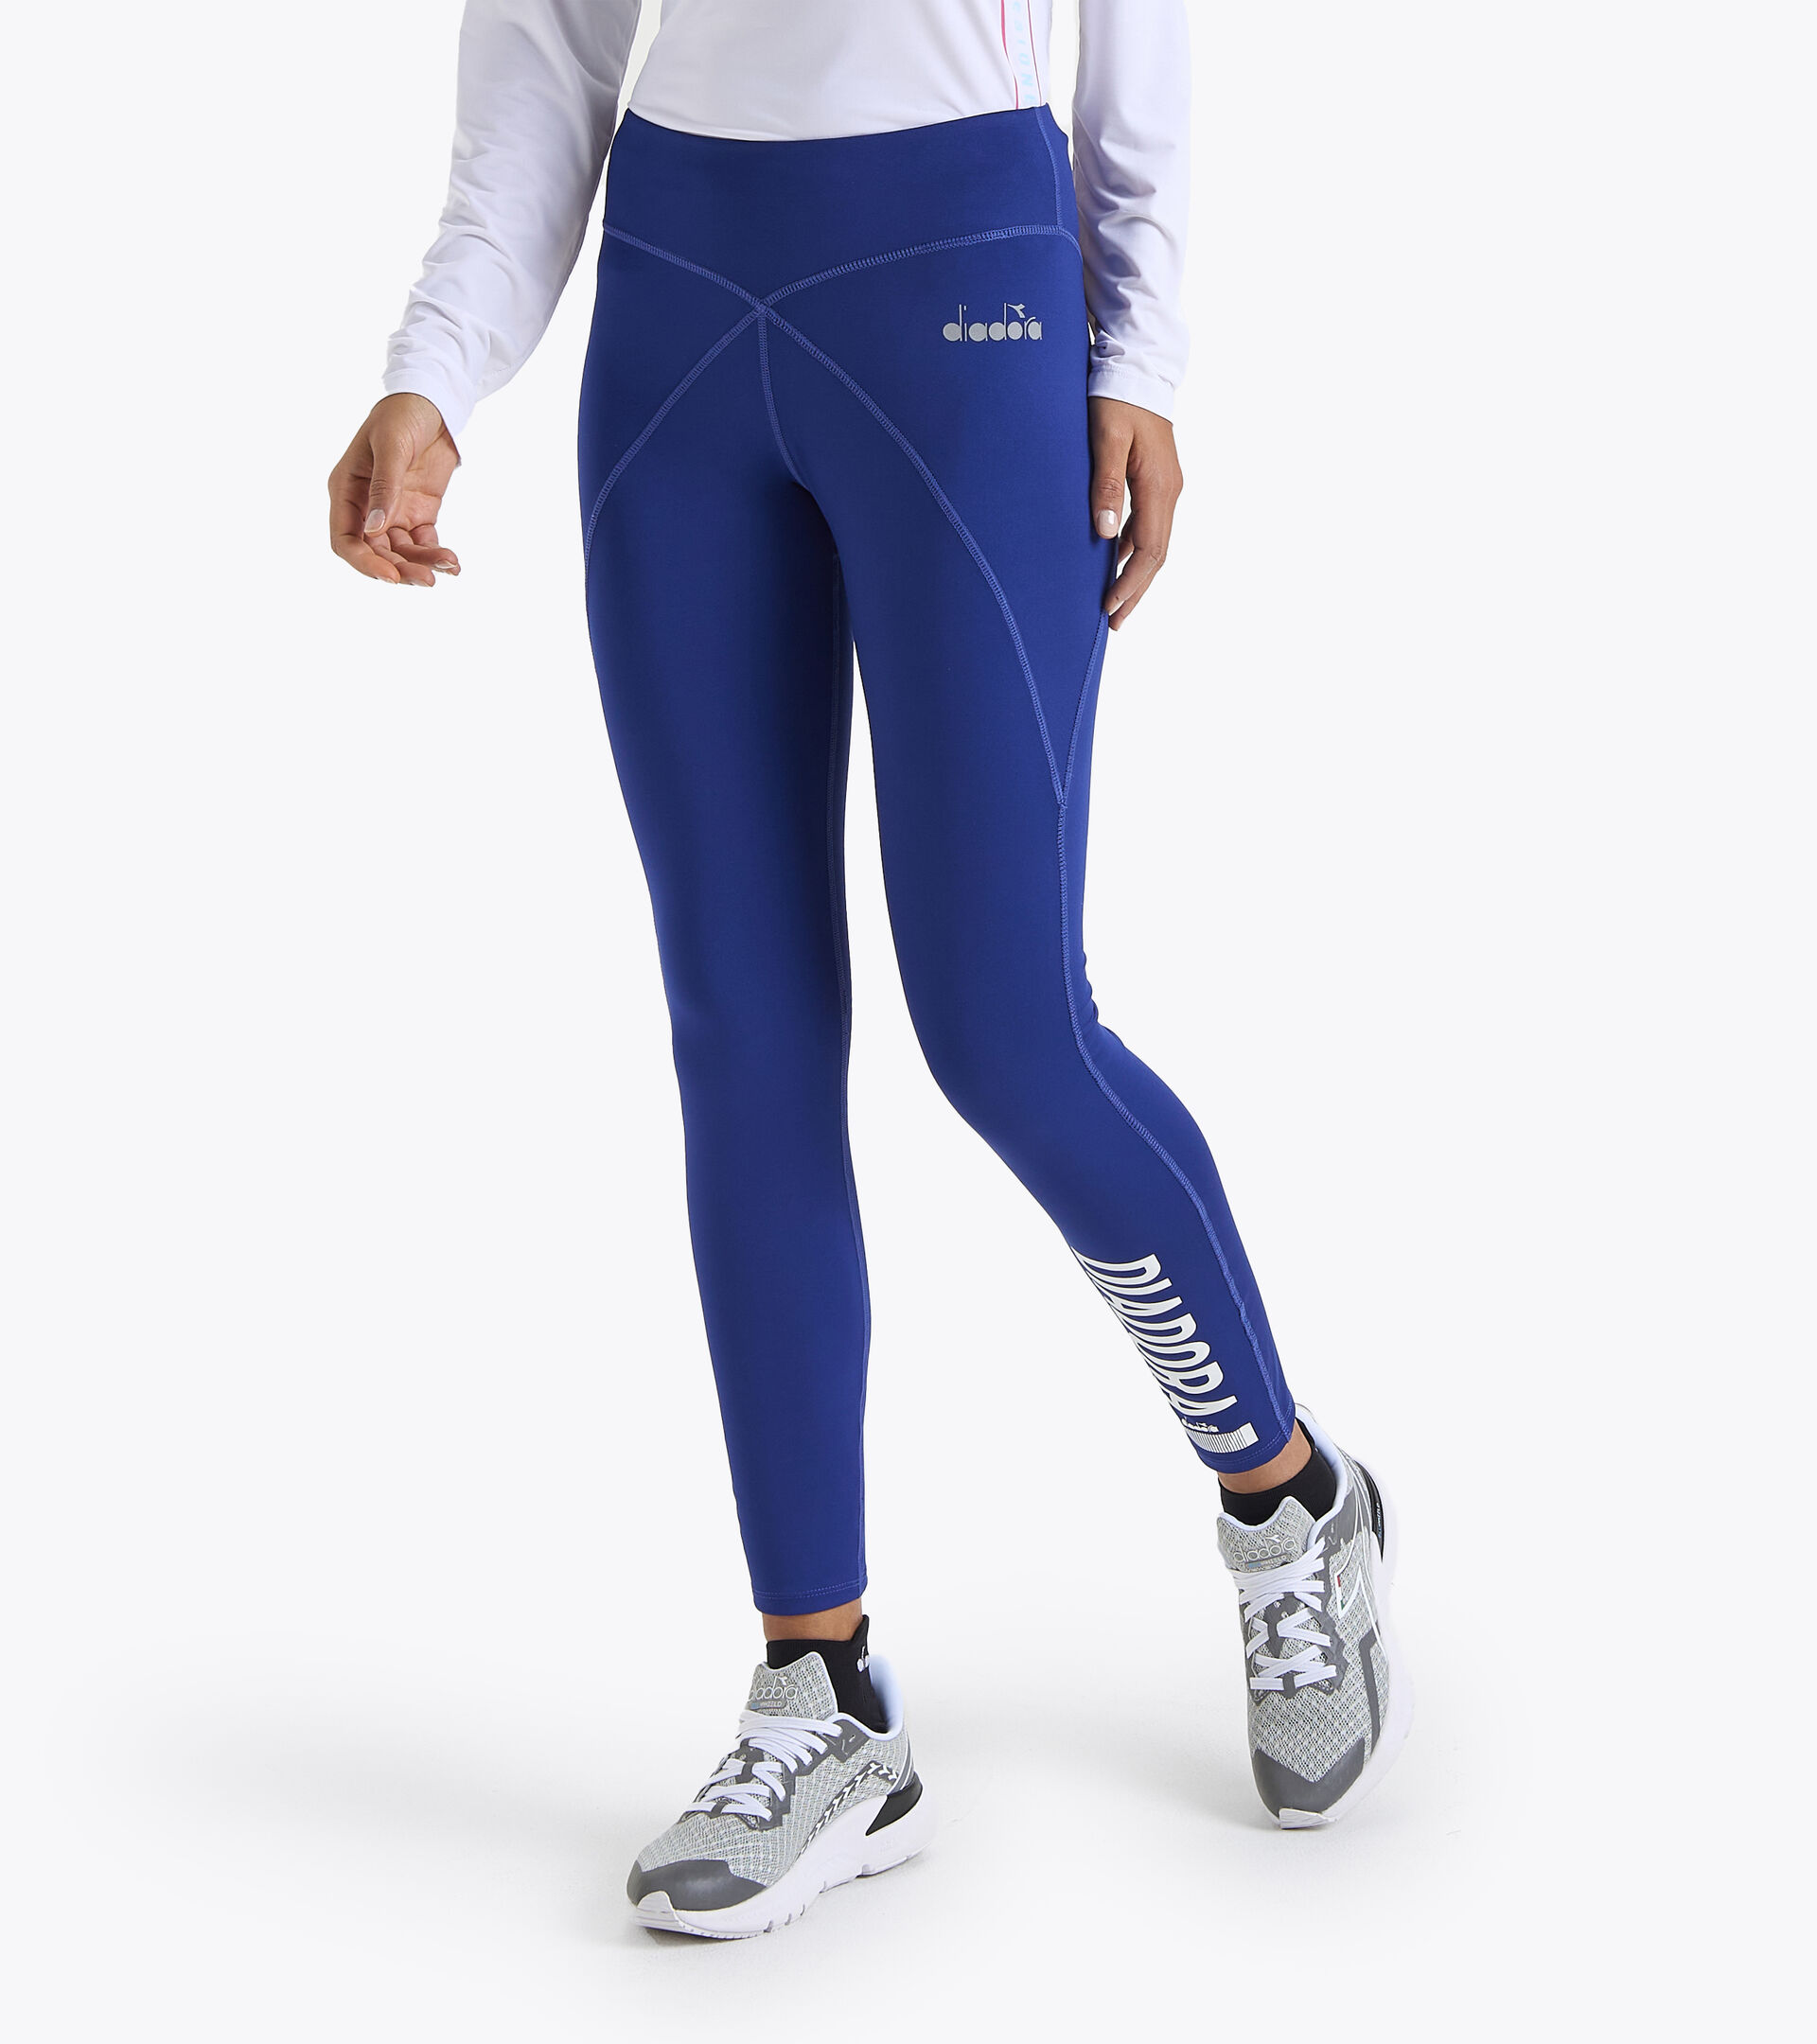 Running shorts - Women  L. TIGHTS BE ONE BLUE PRINT - Diadora